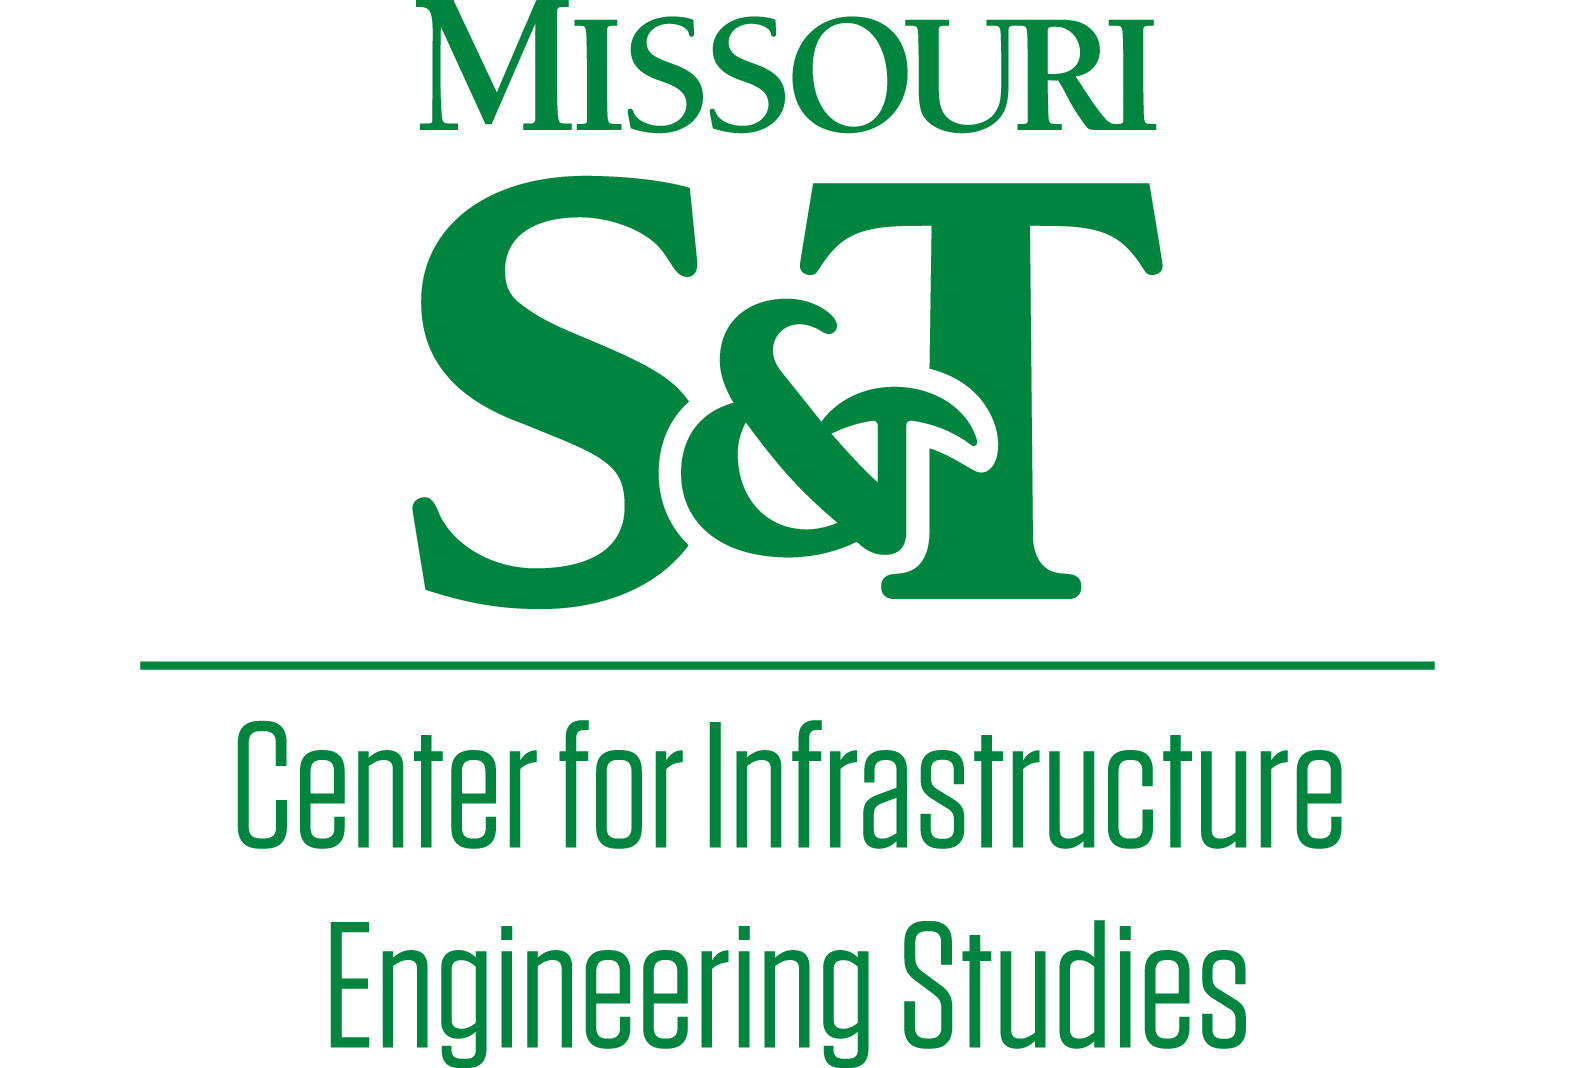 Image of Missouri S&T logo